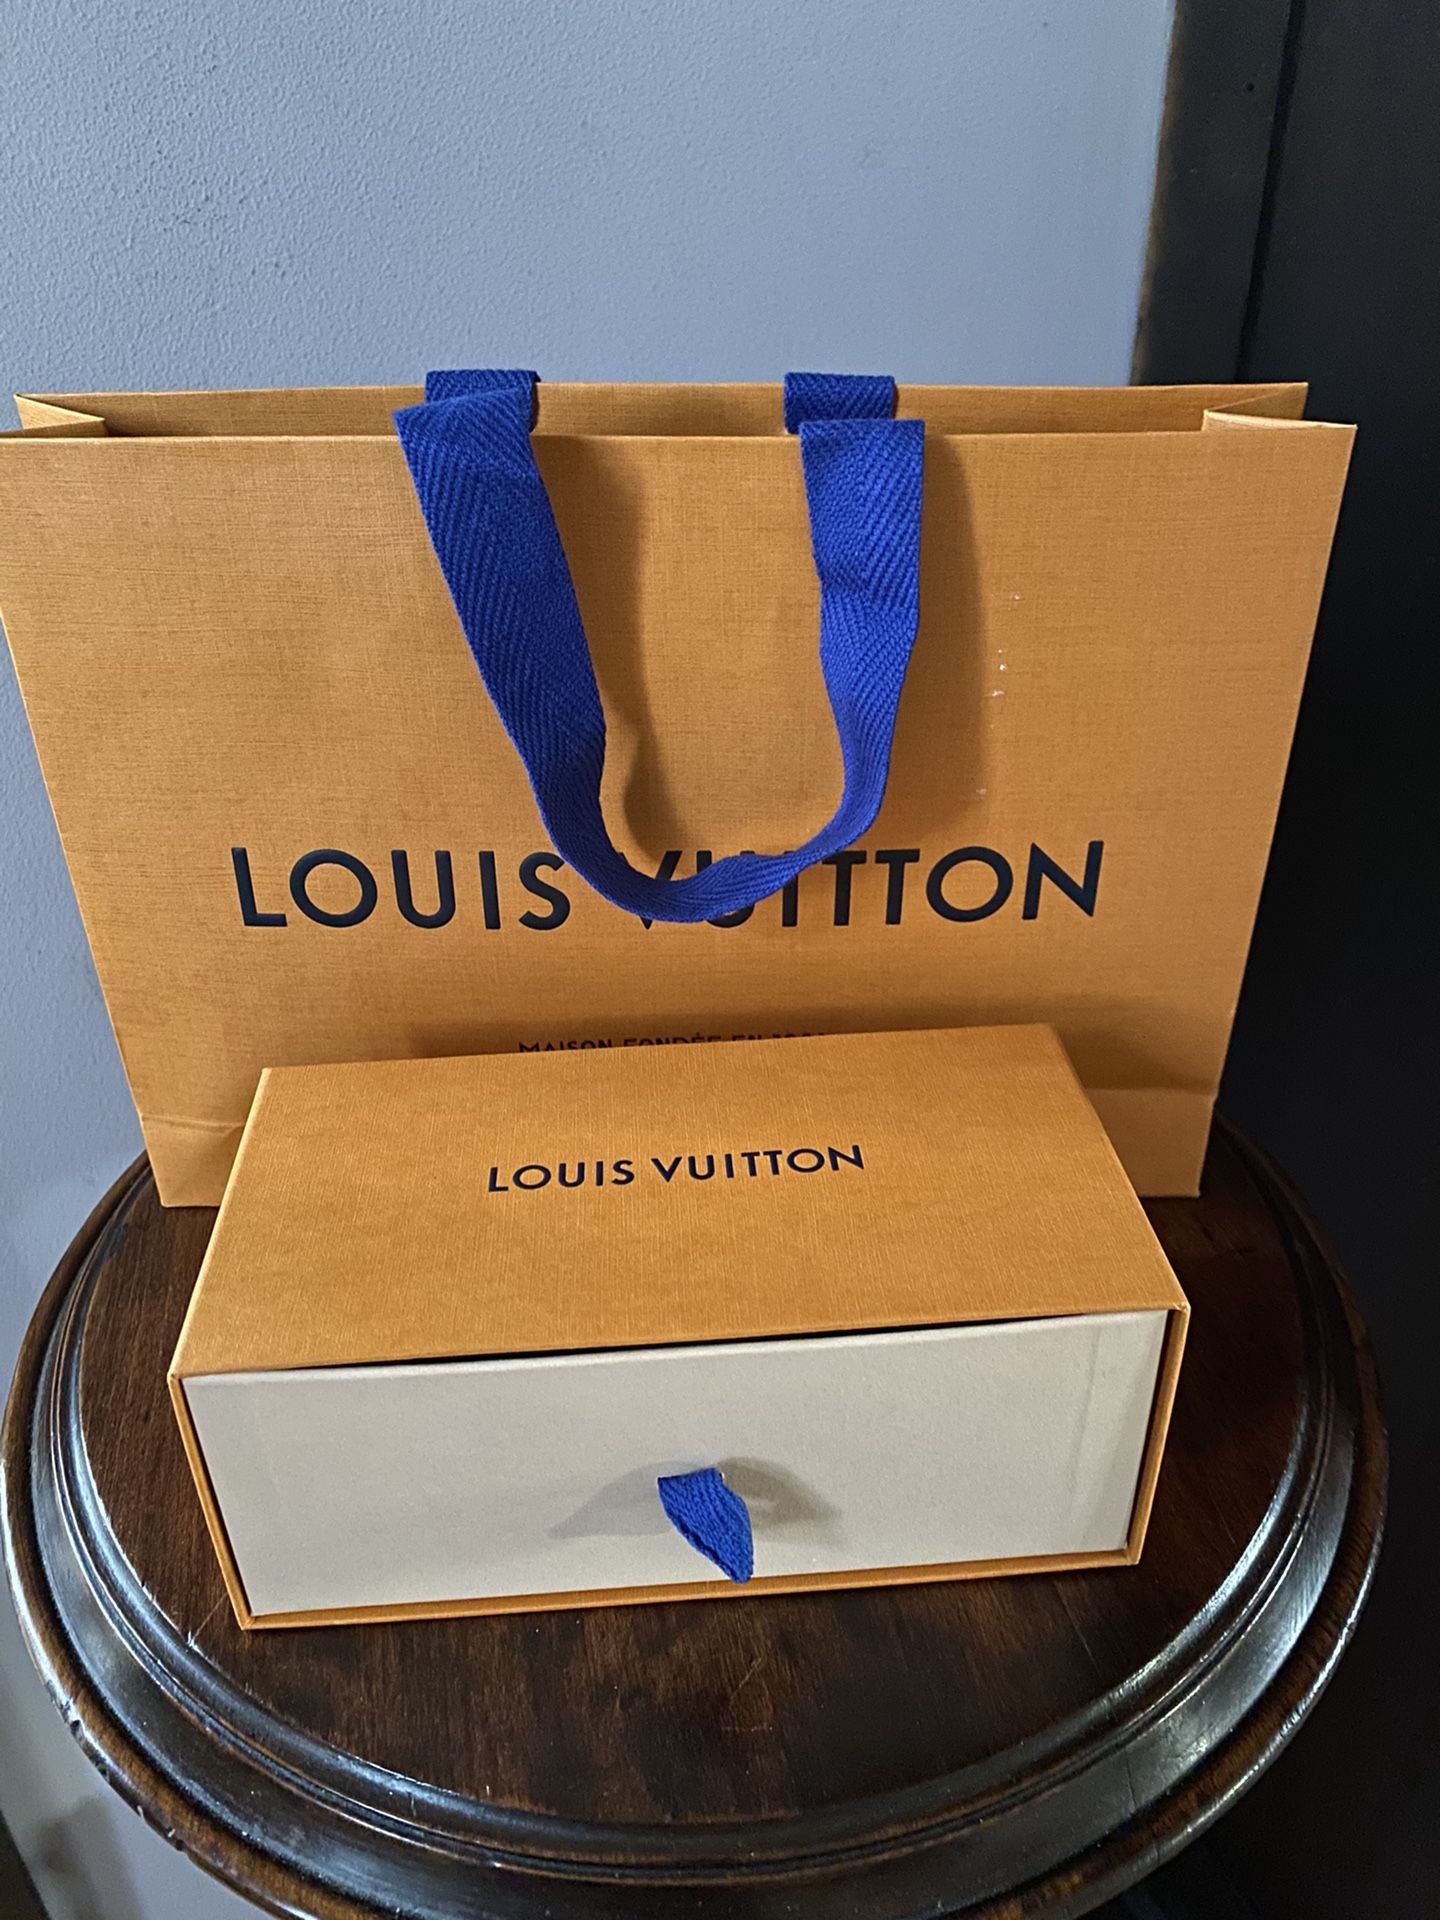 Louis Vuitton Sunglass Box and Bag